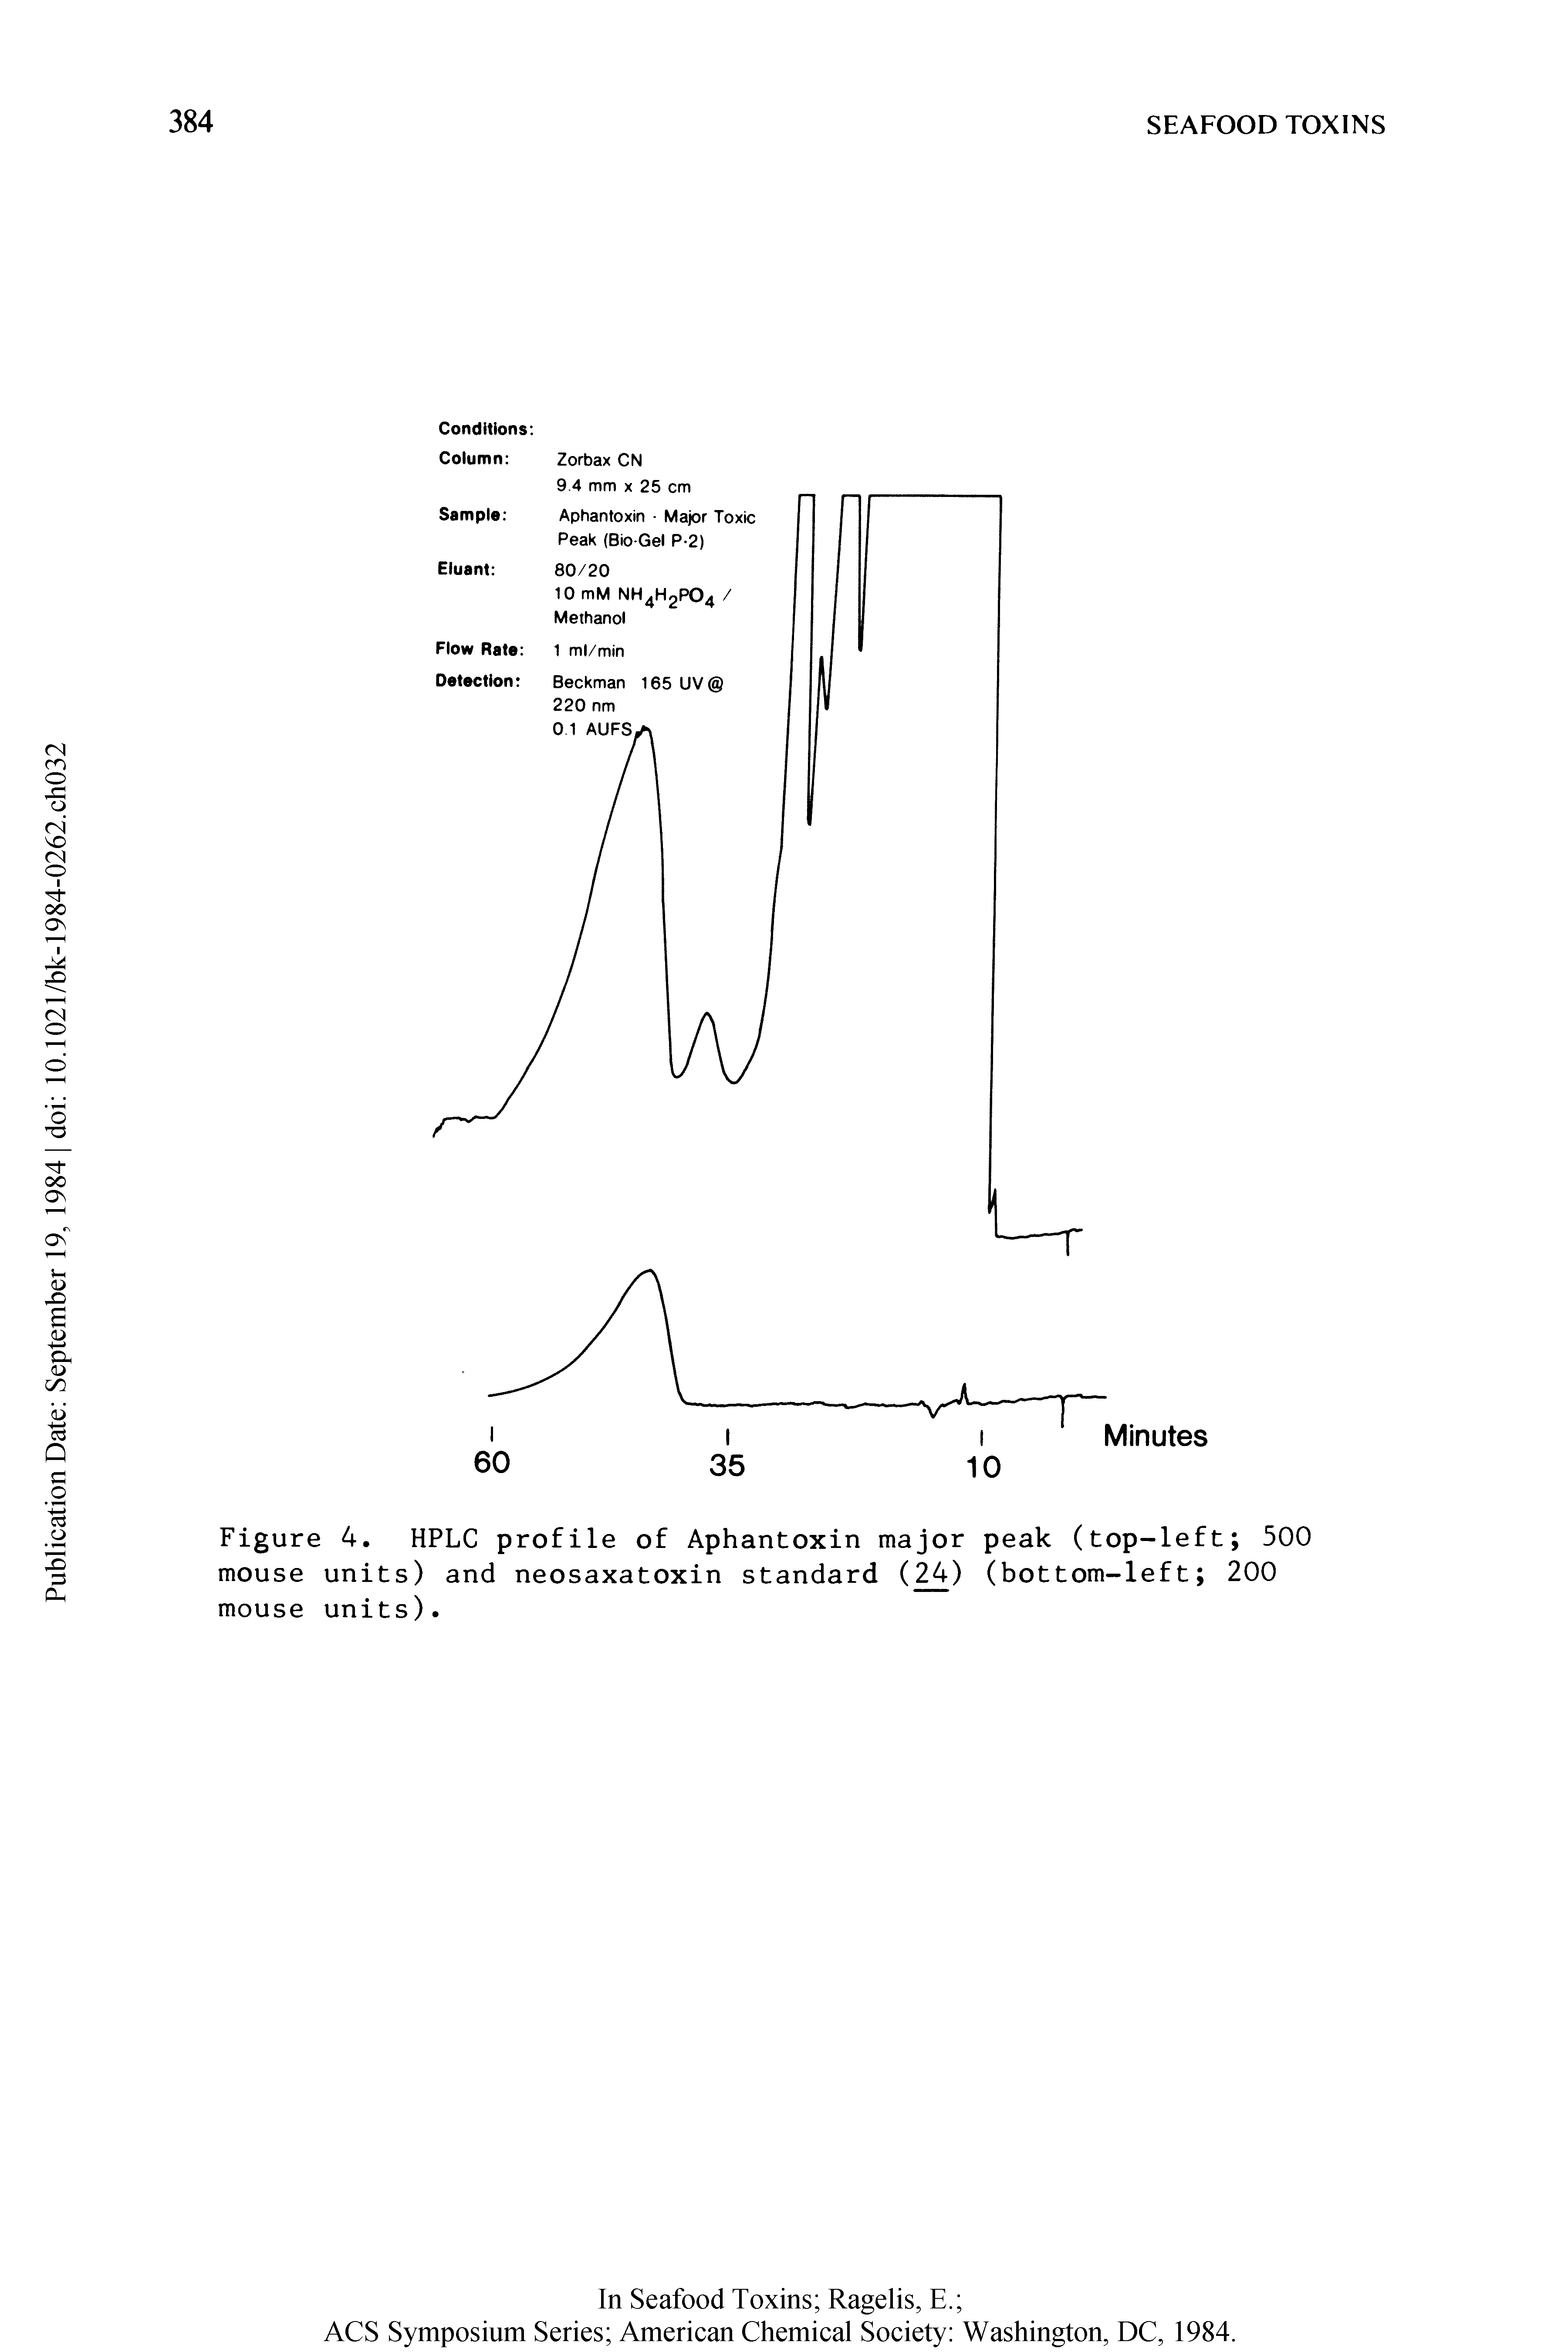 Figure 4. HPLC profile of Aphantoxin major peak (top-left 500 mouse units) and neosaxatoxin standard (2A) (bottom-left 200 mouse units).